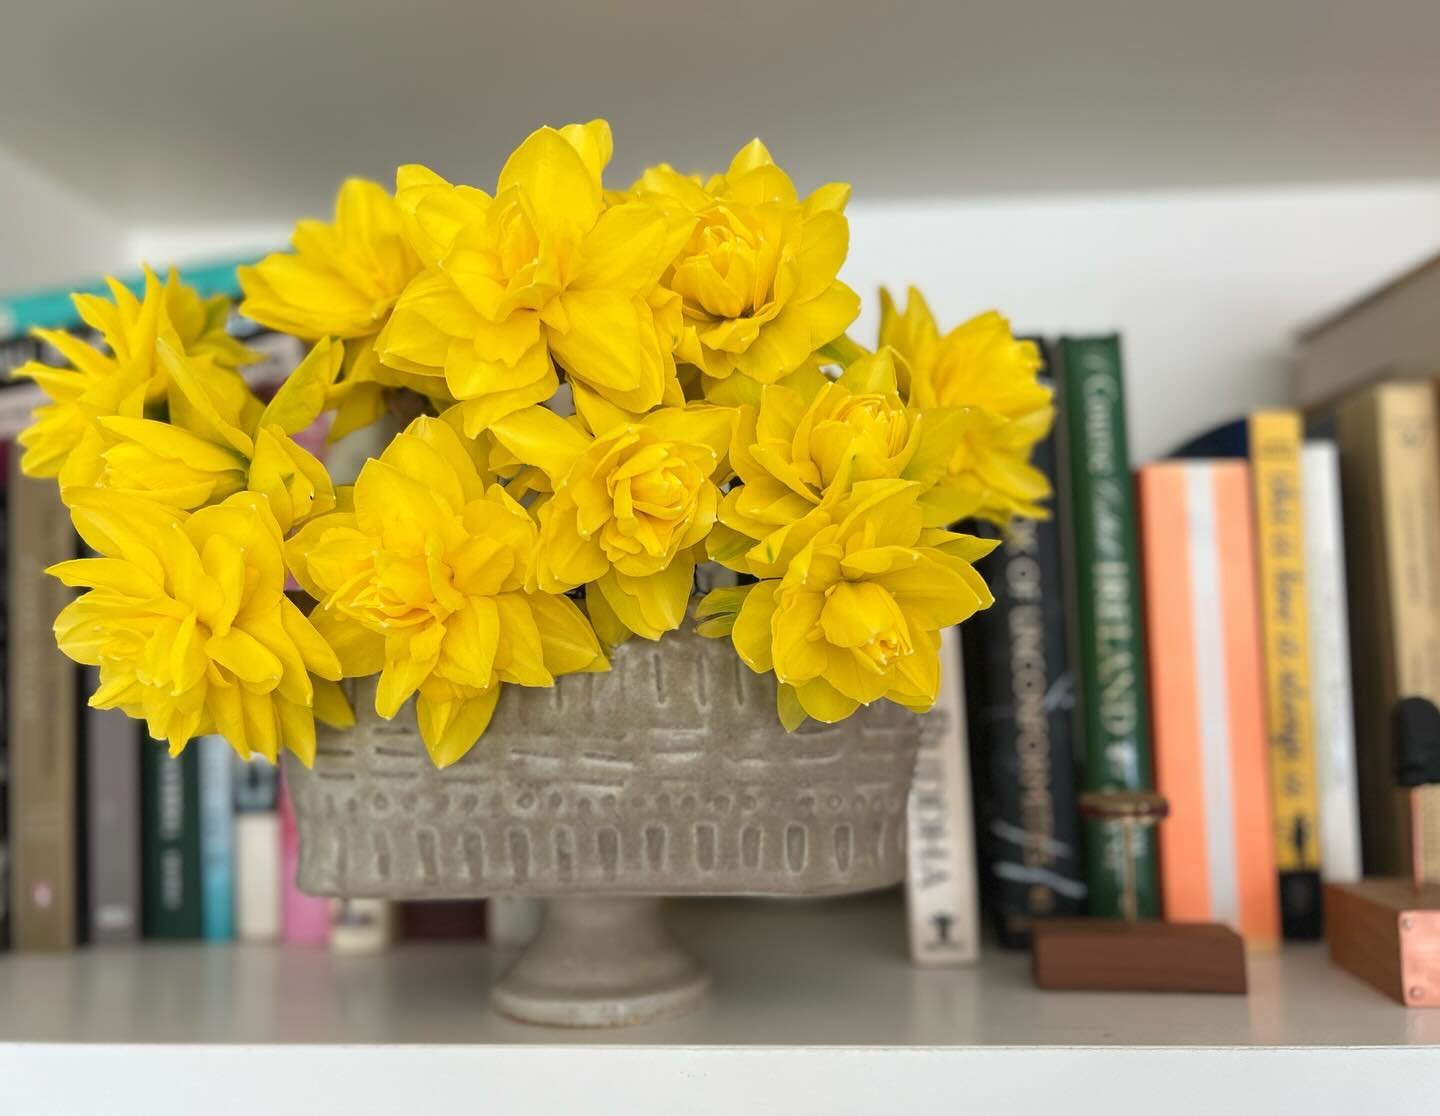 Missing these daffodils that look like dahlias 💛

#slowceramics #slowflowers #chicagoflowers
#hydroponic 
#hydroponicflowers
#hydroponicflowerfarm
#urbanfarm
#urbanmicroflowerfarm
#microflowerfarm
#flowers 
#flowercsa
#flowersubscription 
#chicagofl